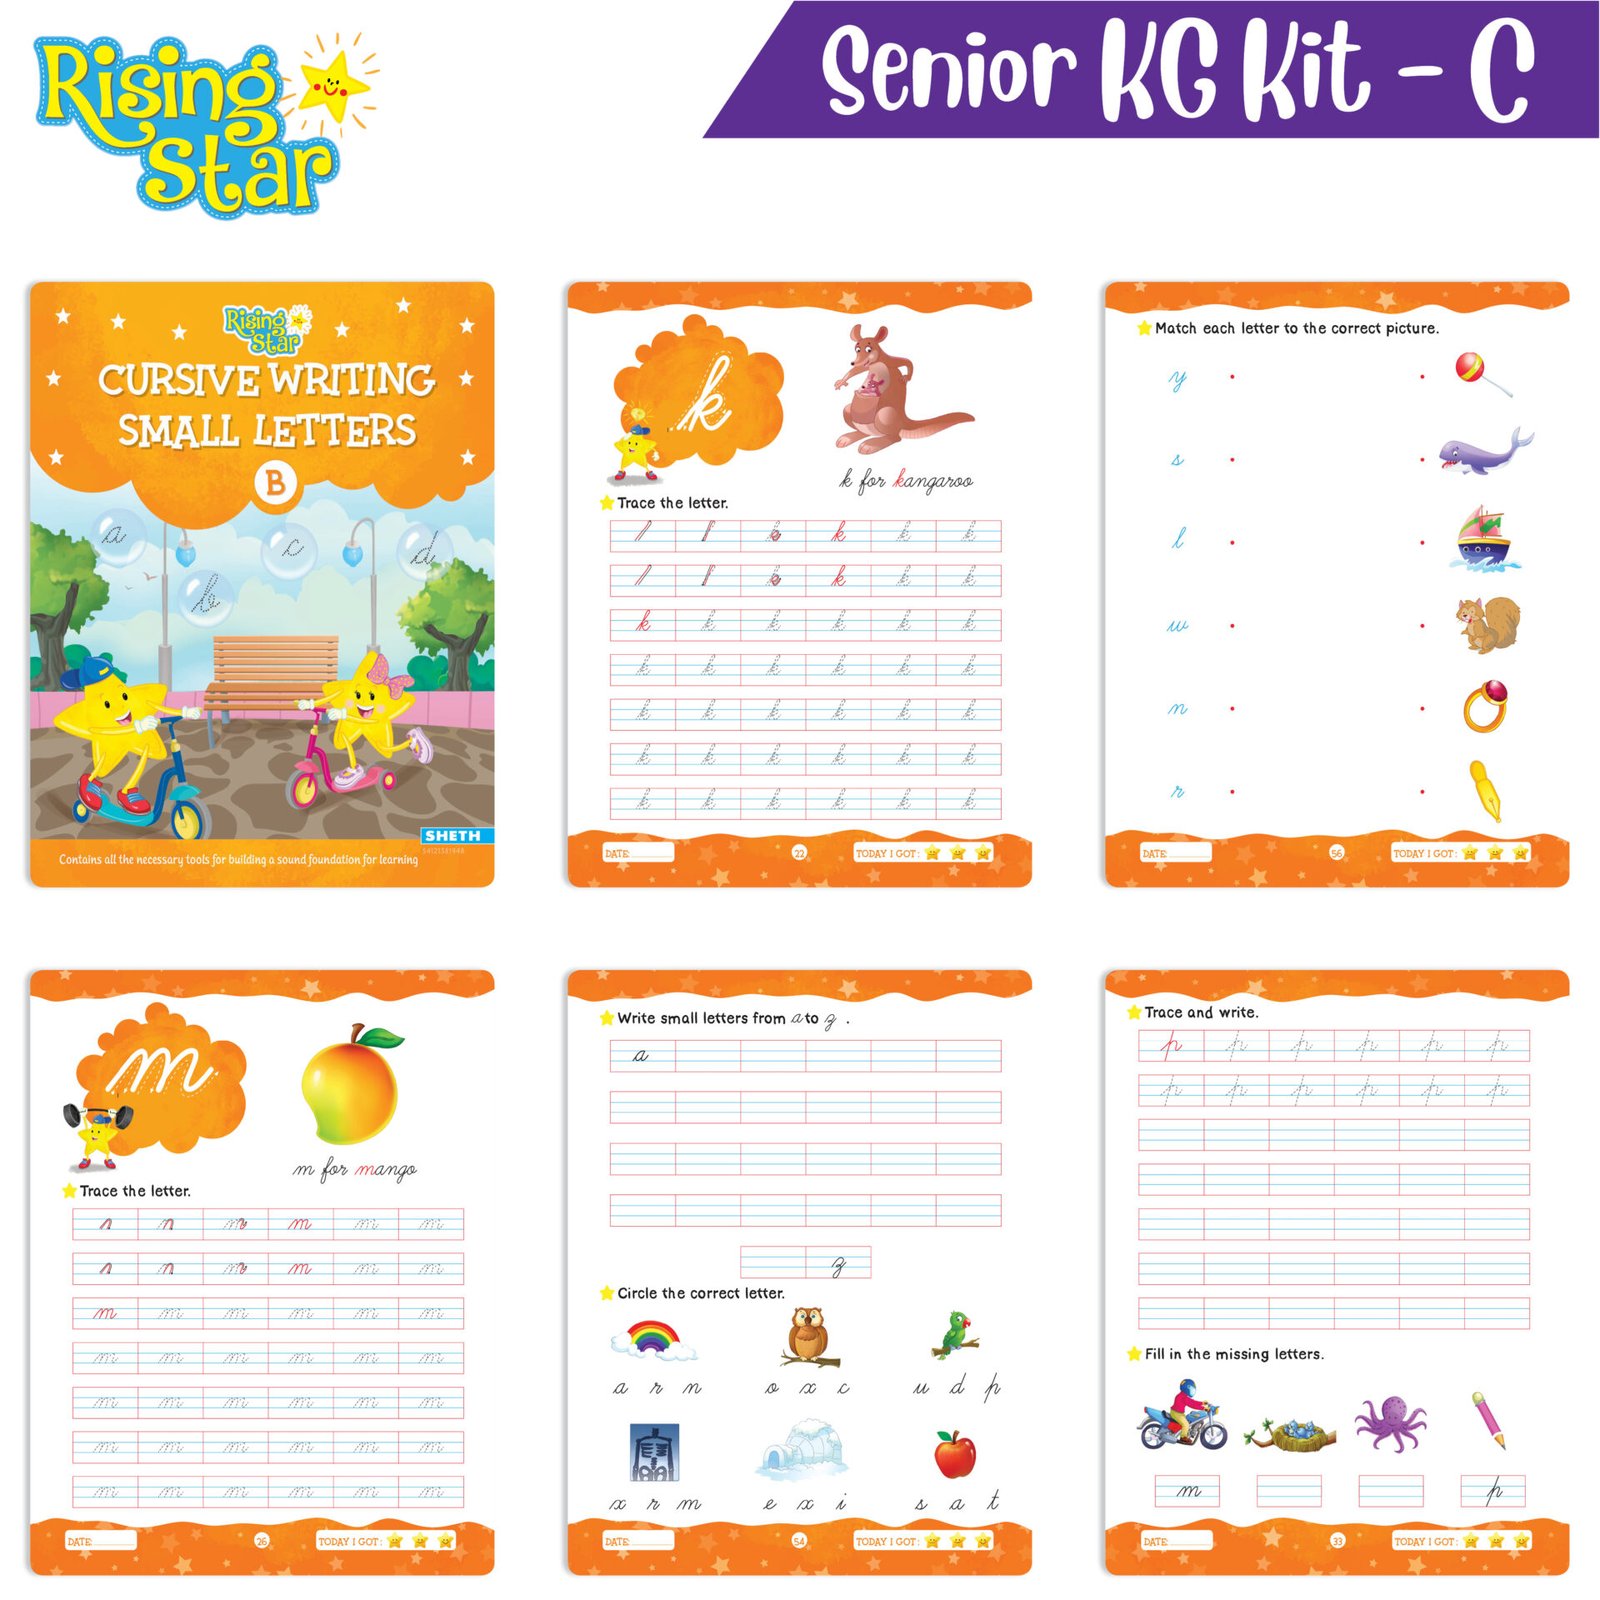 Rising Star Preschool Senior KG Kit C 03 Cursive Writing Small Letters B